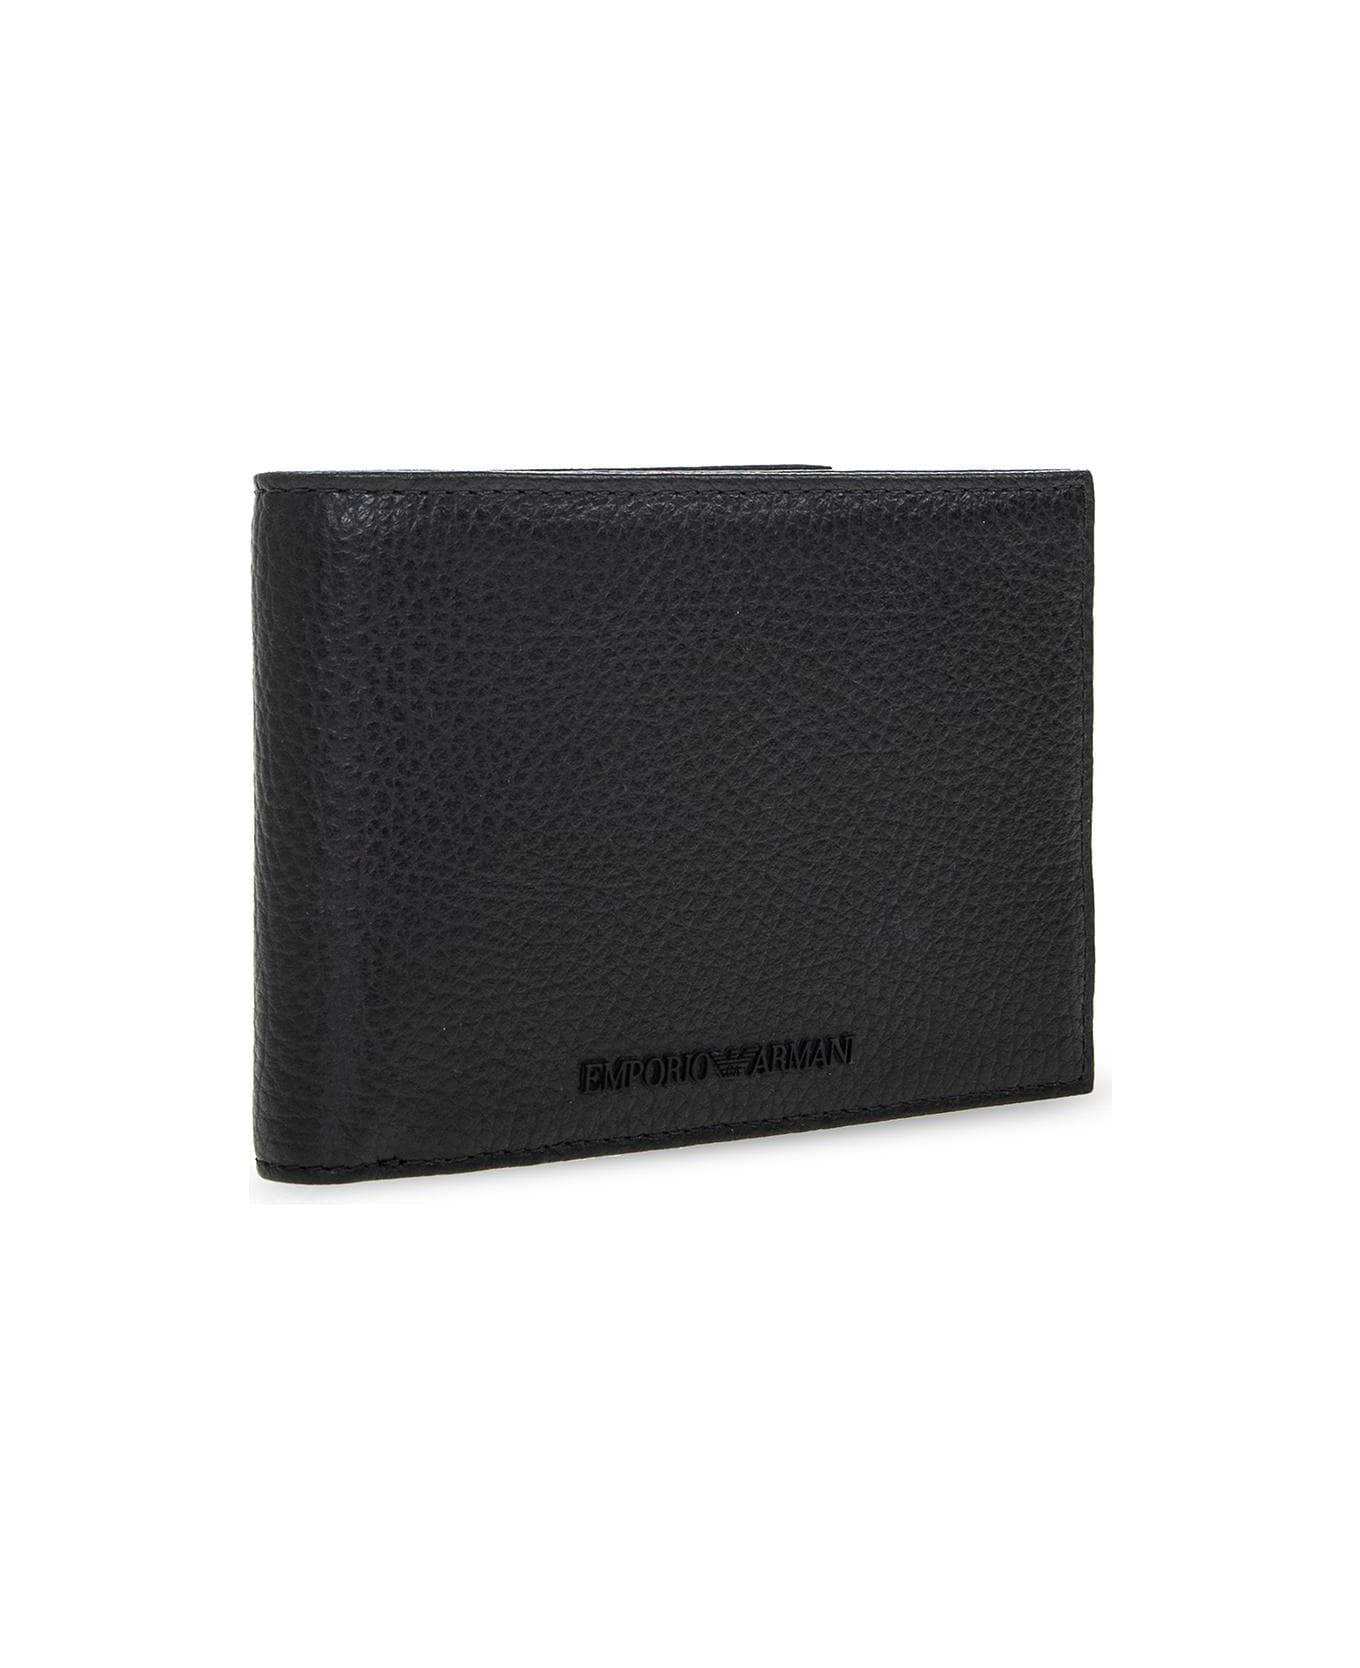 Emporio Armani Leather Wallet - Nero